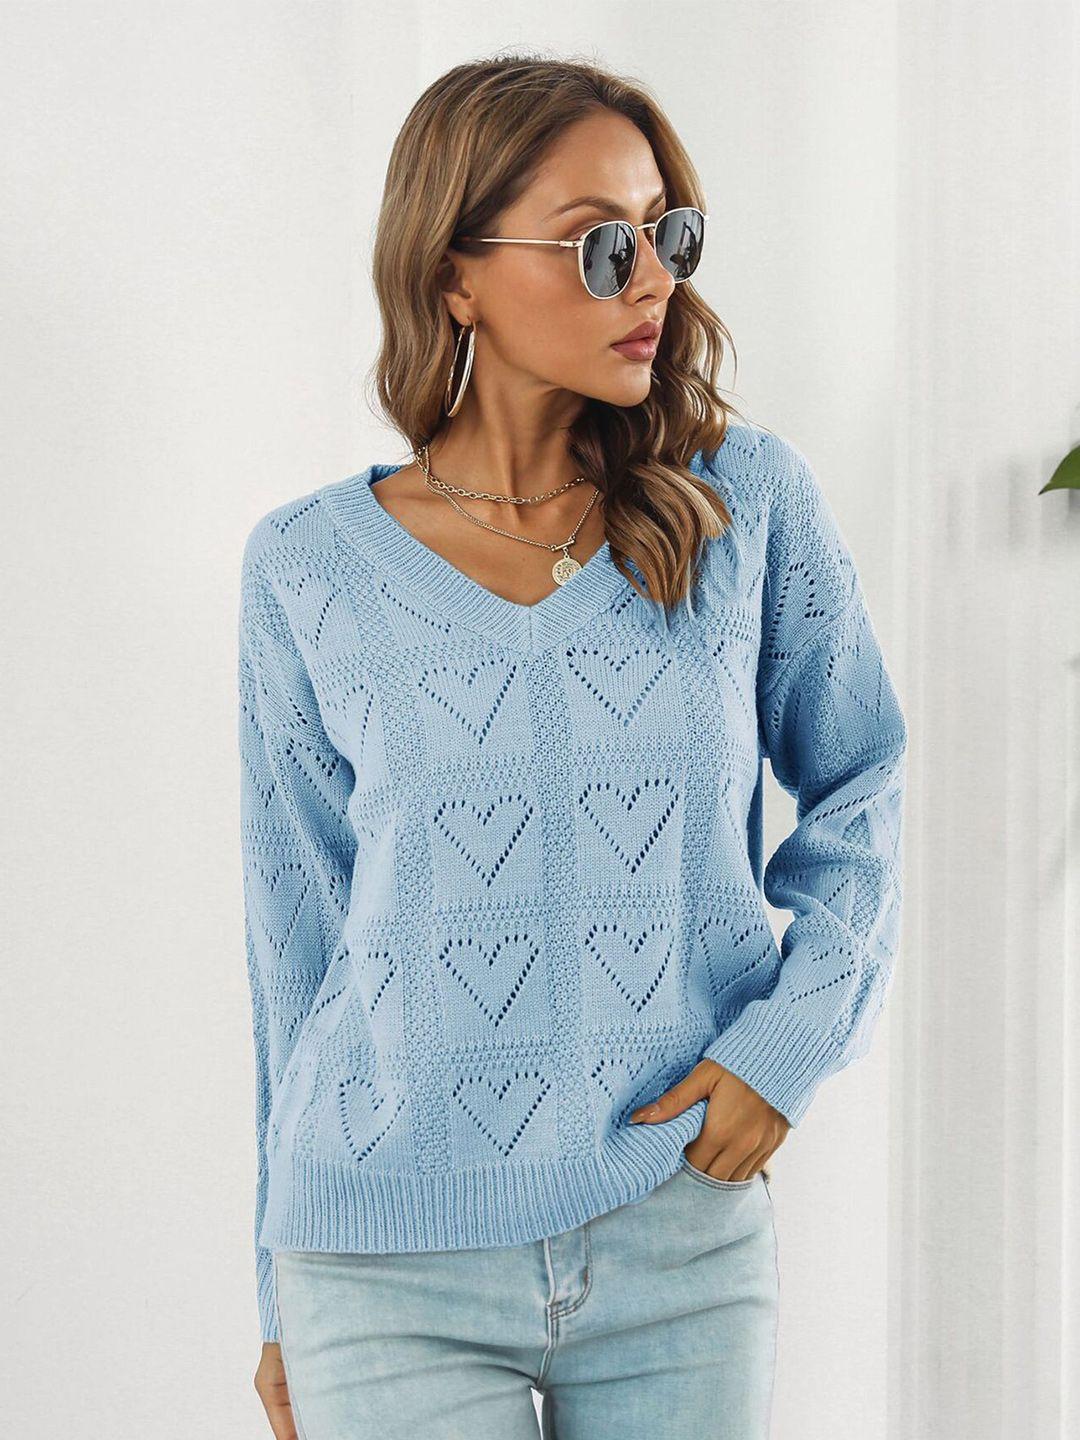 stylecast women blue pullover sweater